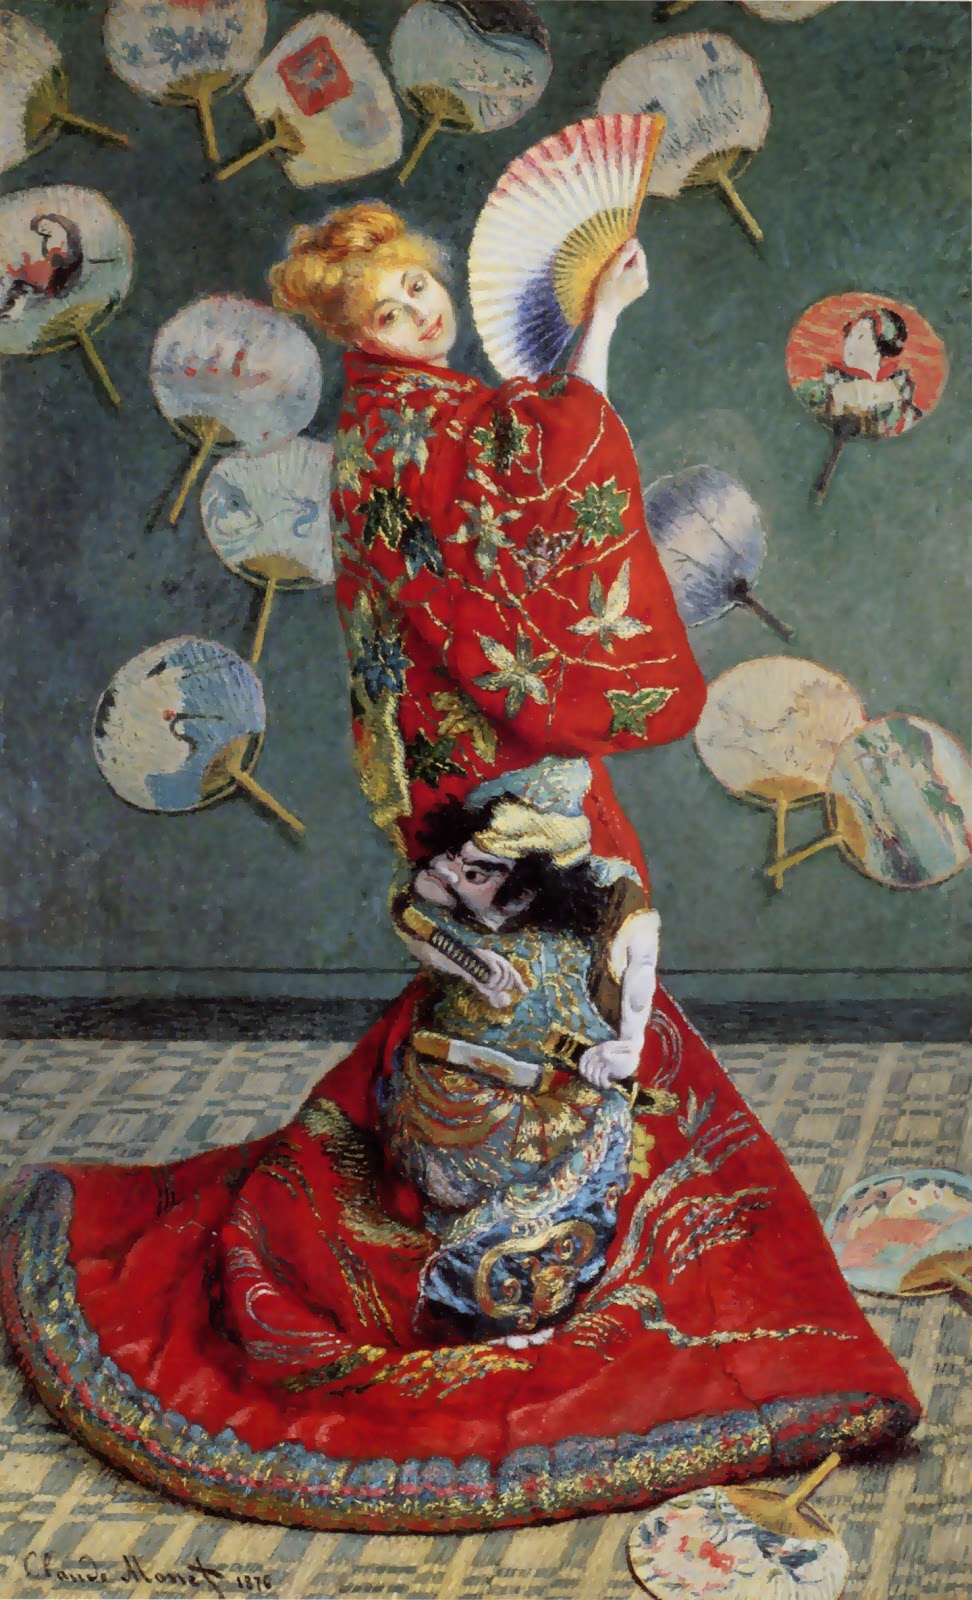 Claude+Monet-1840-1926 (354).jpg